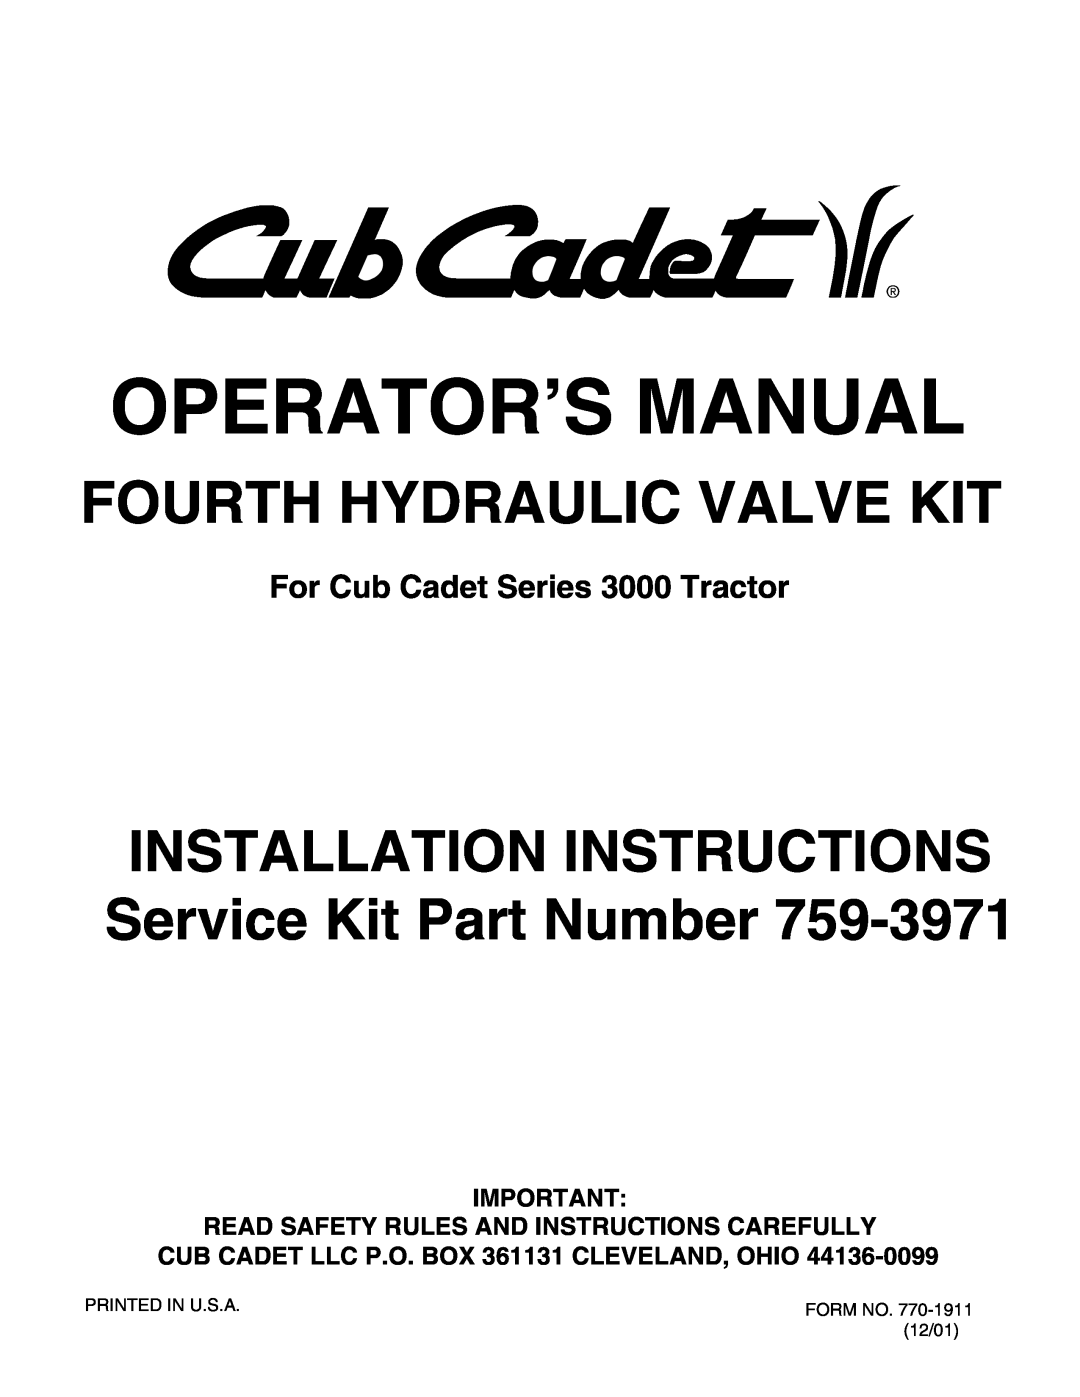 Bolens Series 3000 installation instructions Operator’S Manual, Fourth Hydraulic Valve Kit 